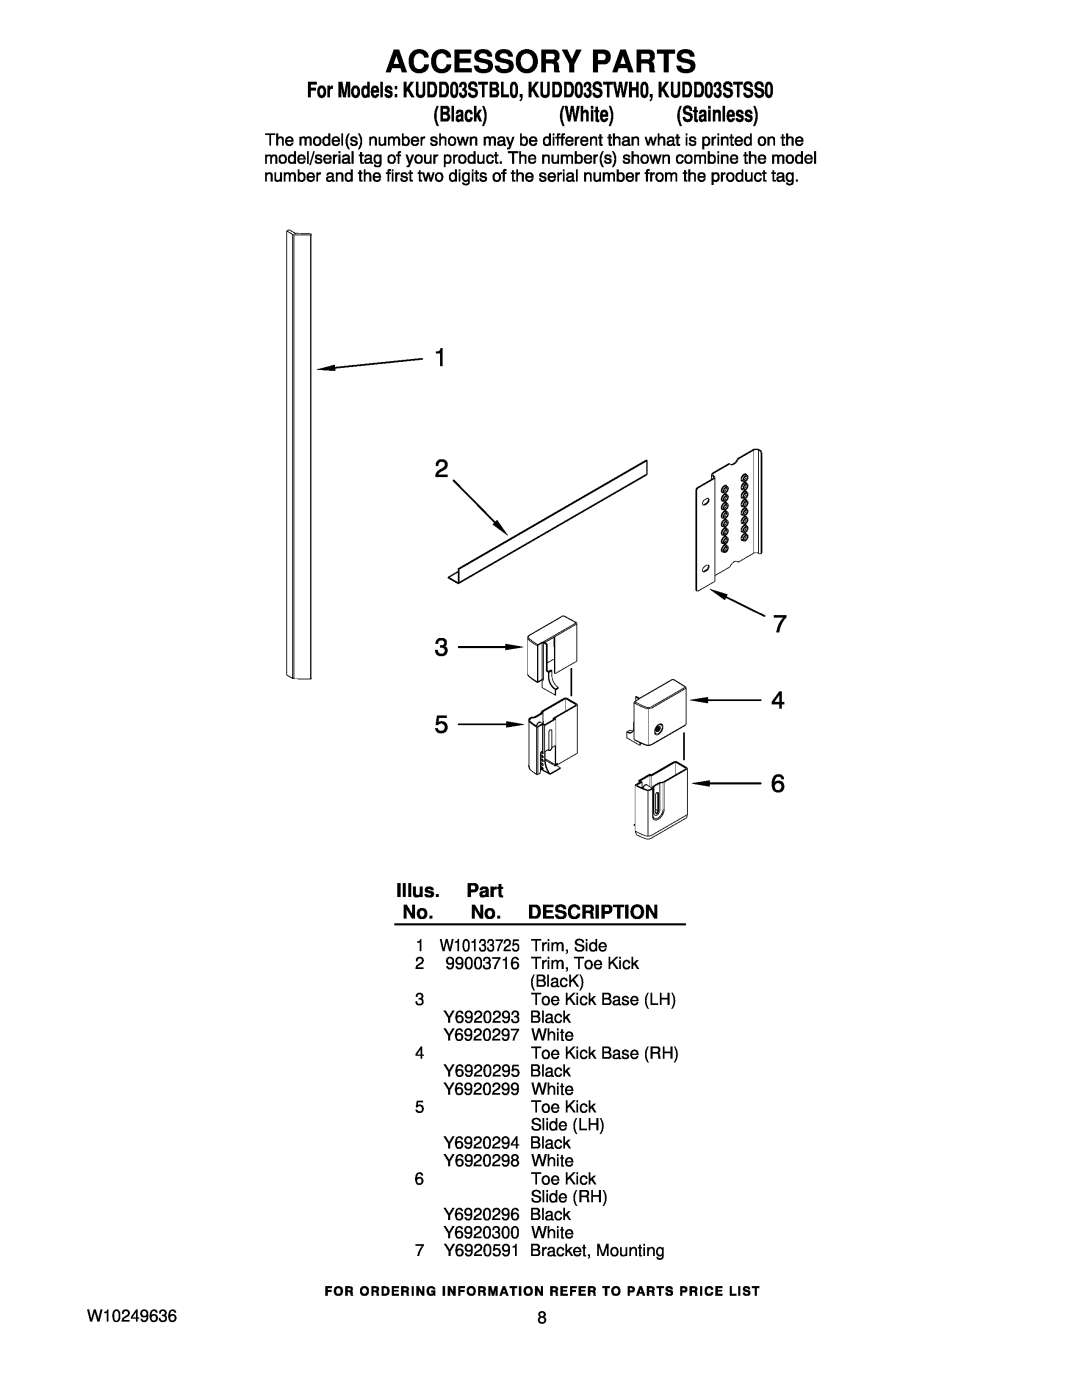 KitchenAid manual Accessory Parts, For Models KUDD03STBL0, KUDD03STWH0, KUDD03STSS0, Black White Stainless 